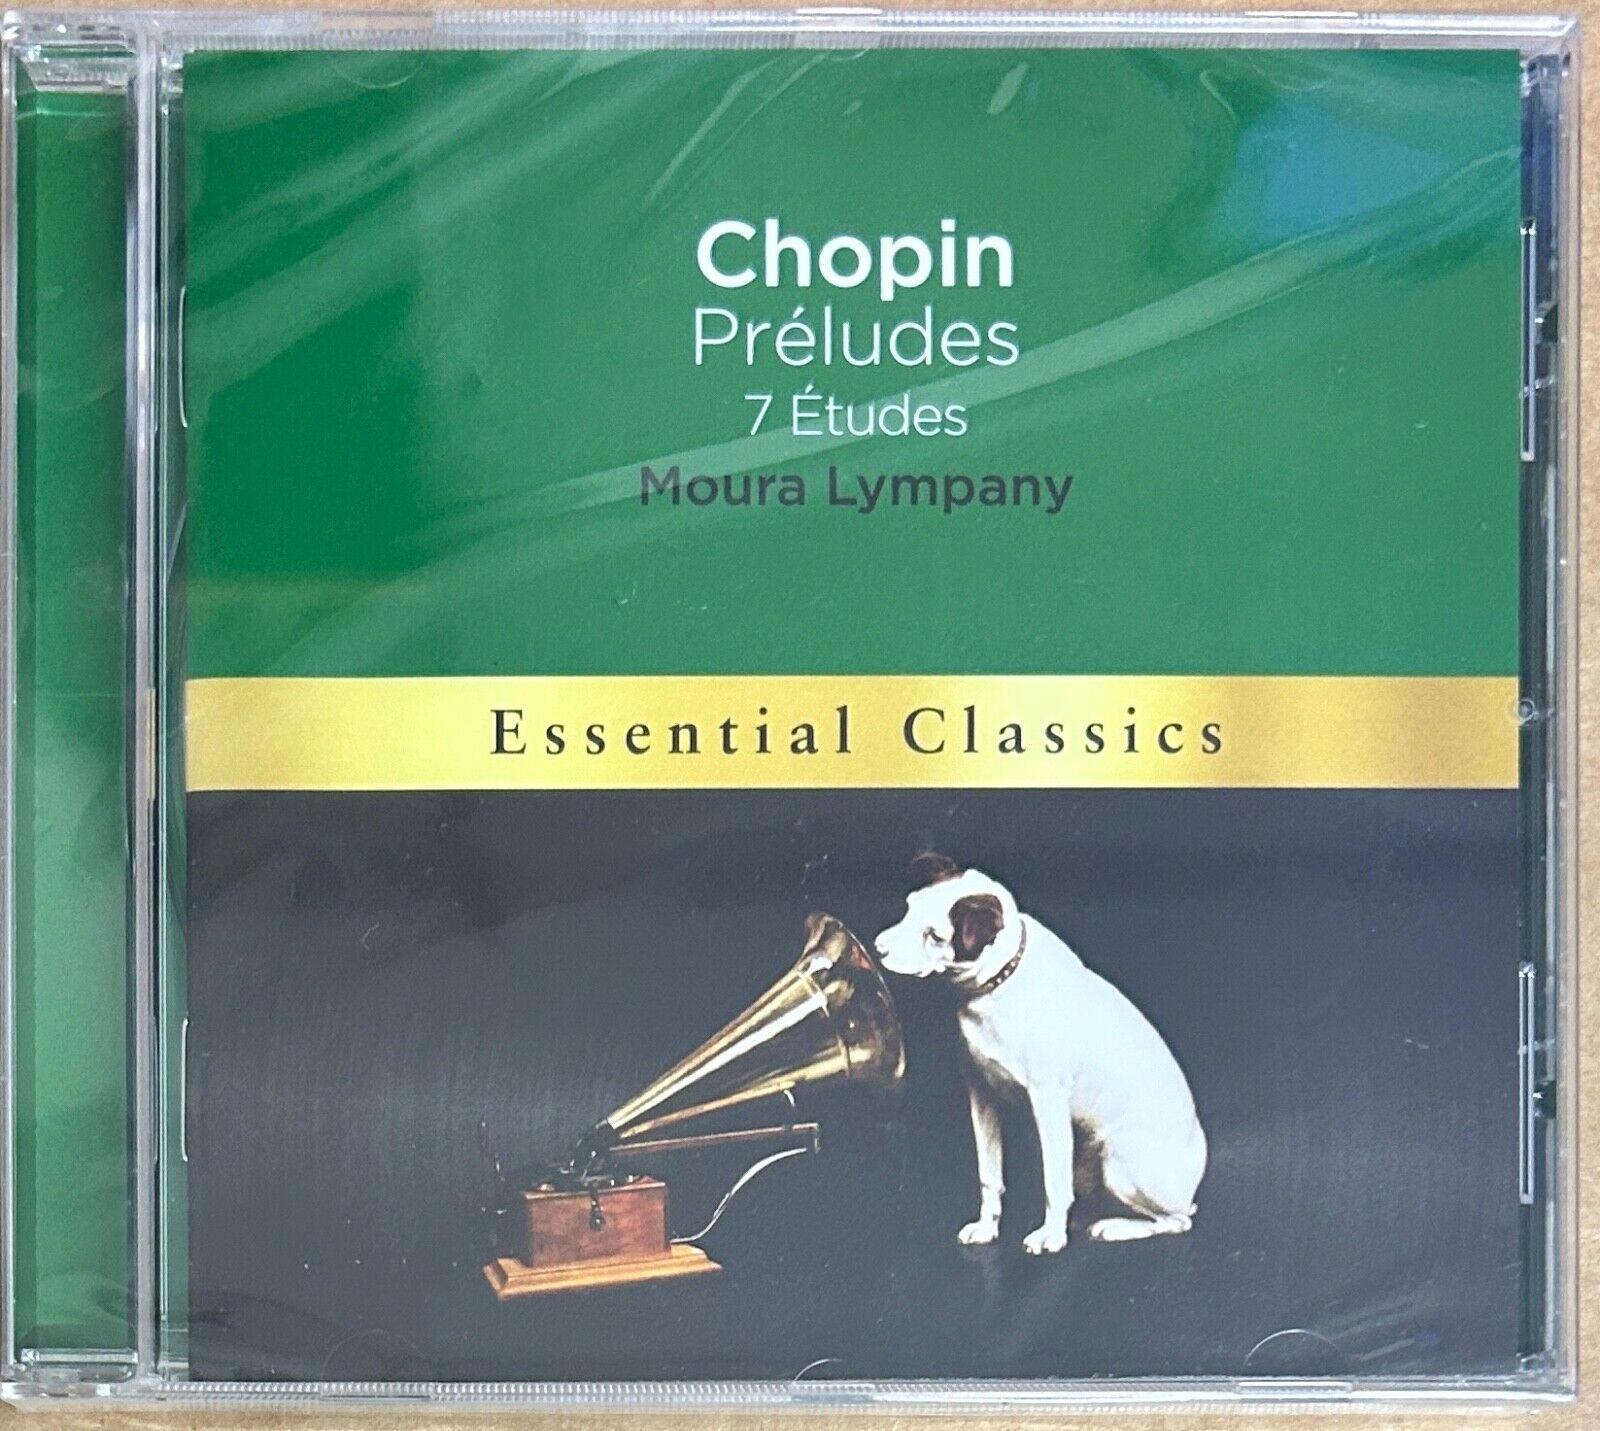 Lumpany - Chopin Preludes 7 Etudes (CD) New Sealed